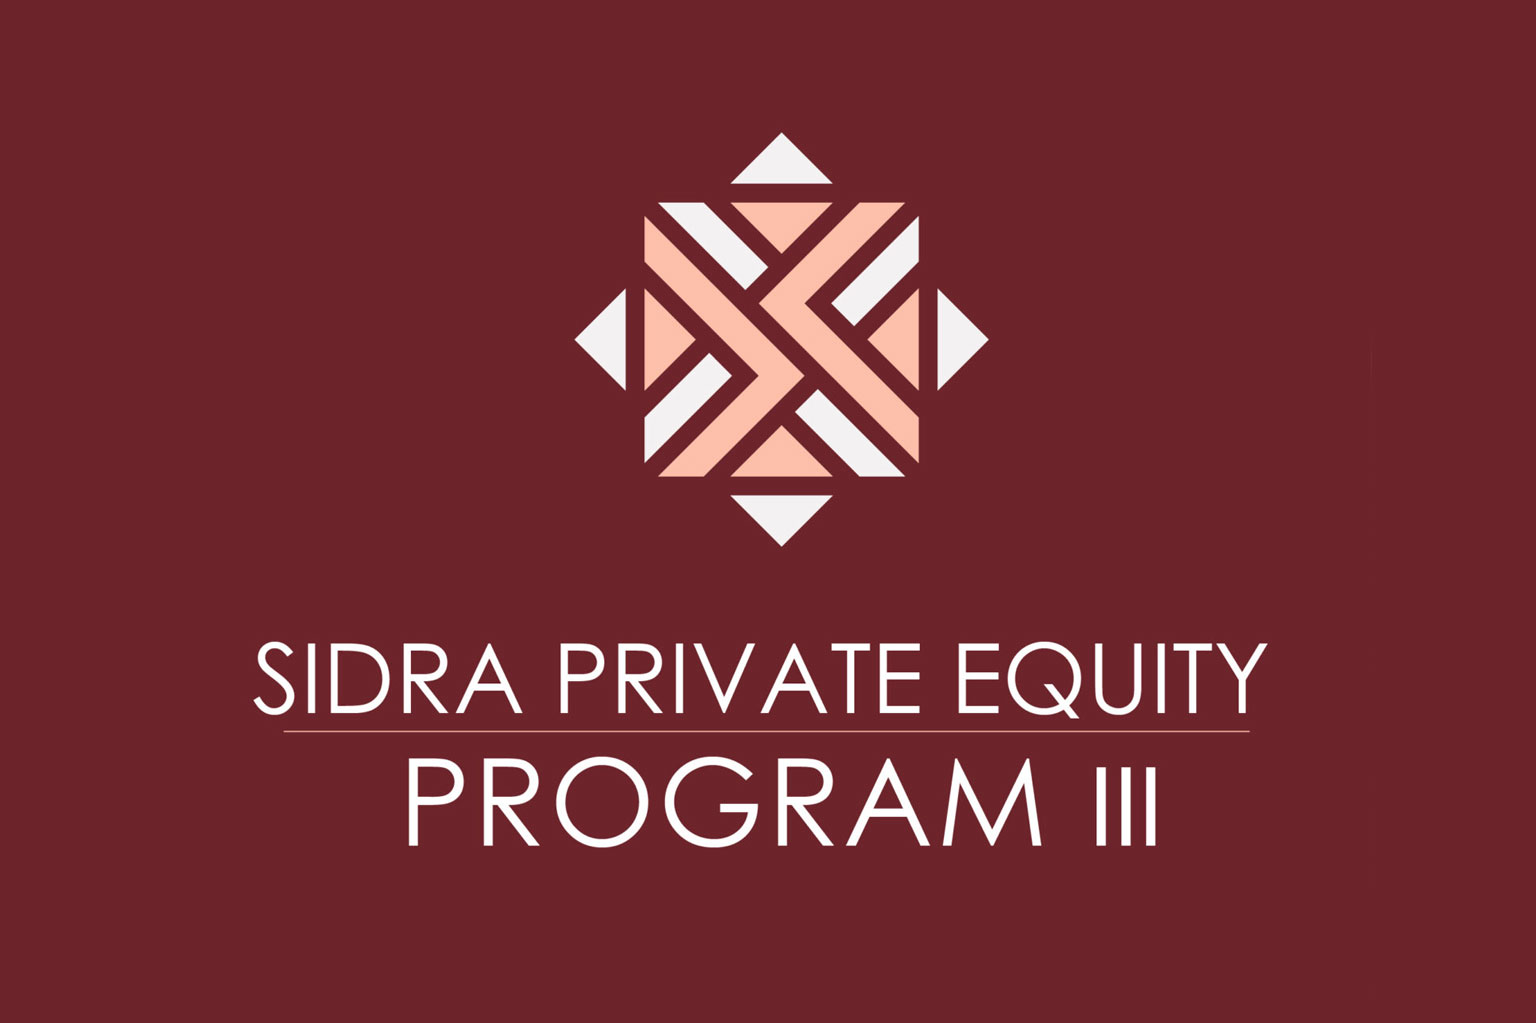 Sidra Private Equity Program III